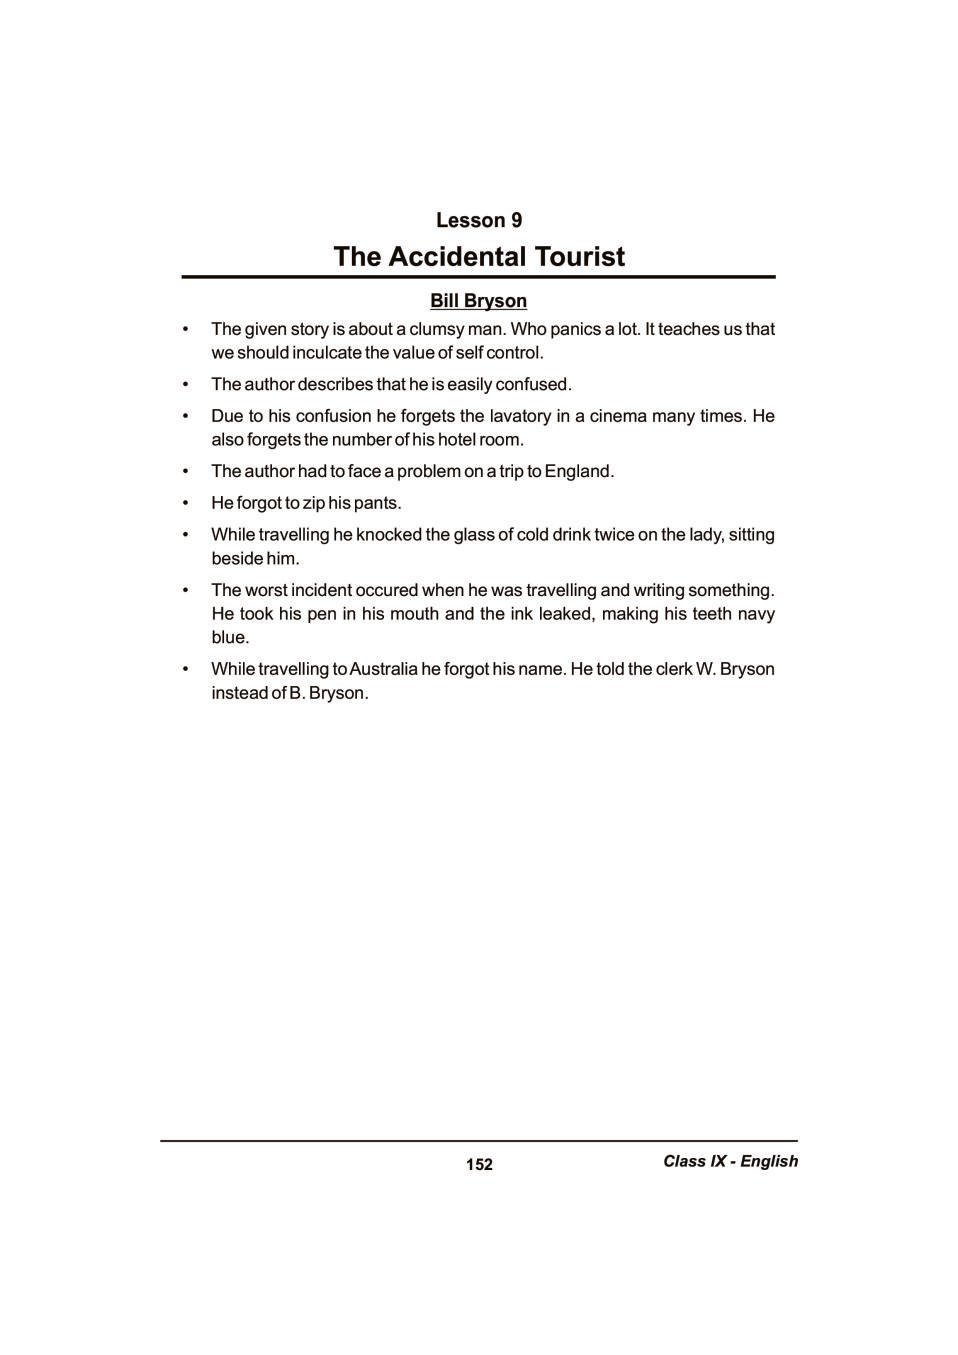 accidental tourist class 9 pdf